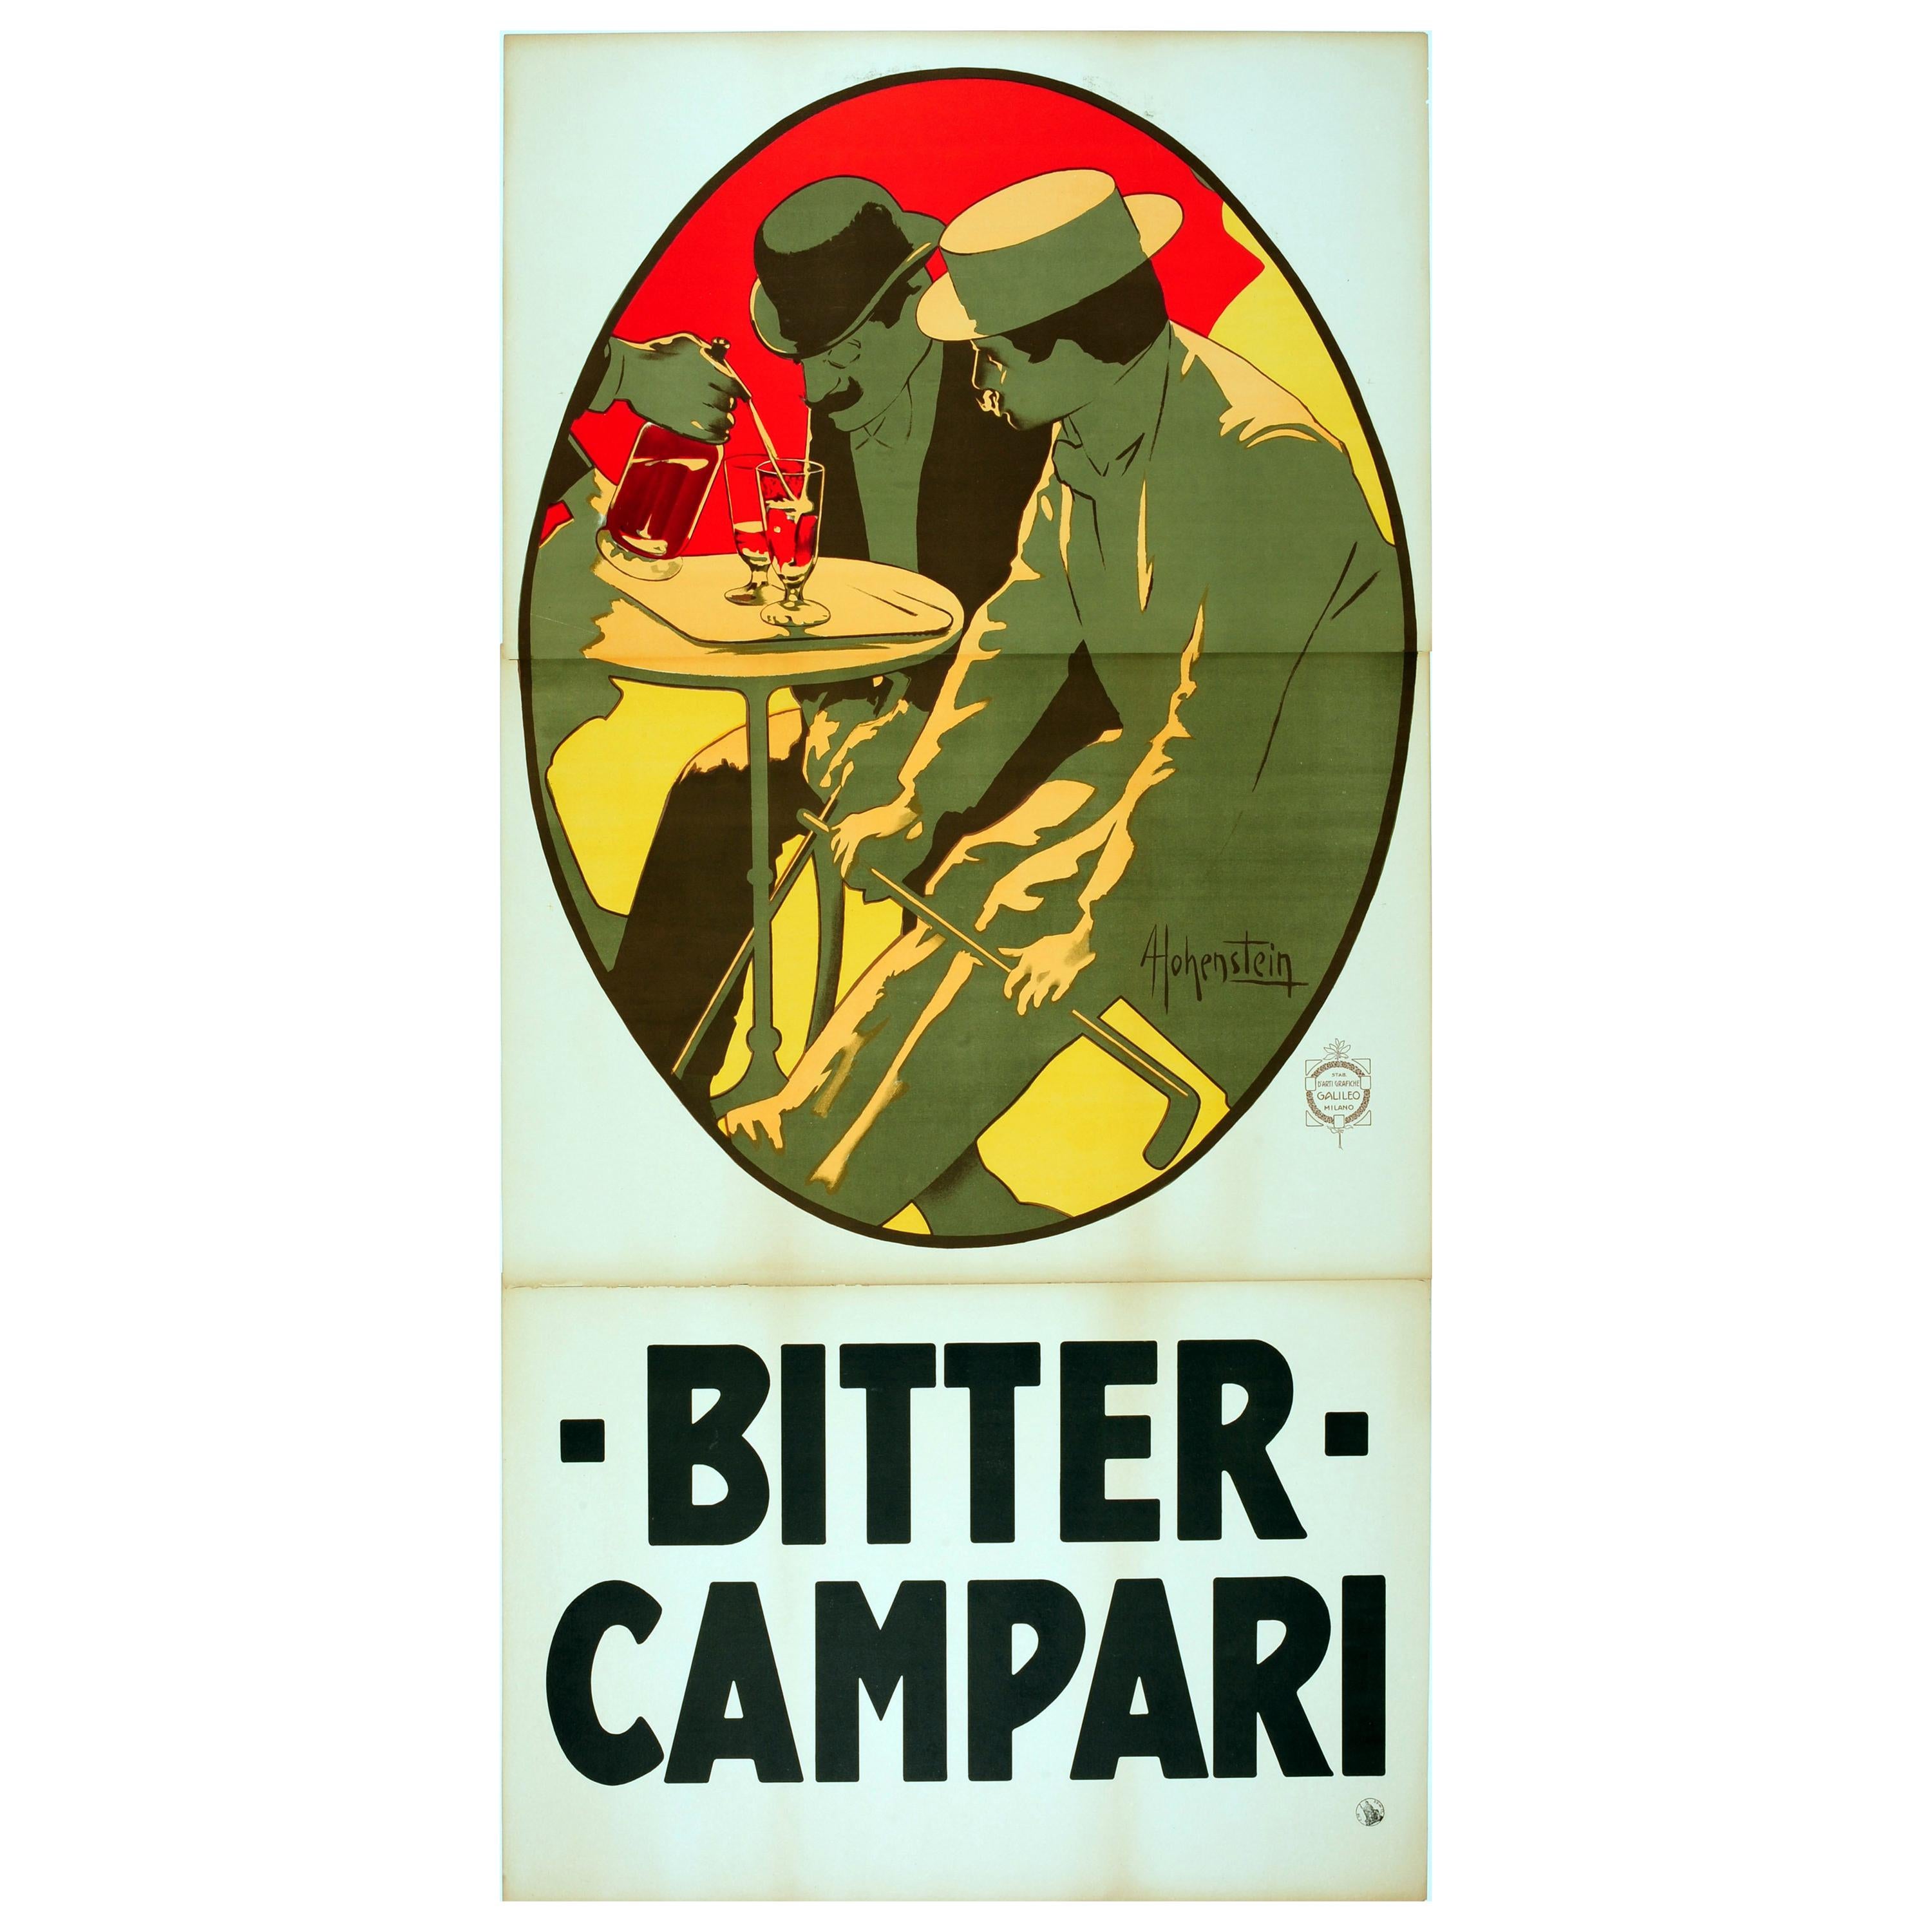 Large Early Original Antique Drink Advertising Poster - Bitter Campari Aperitif